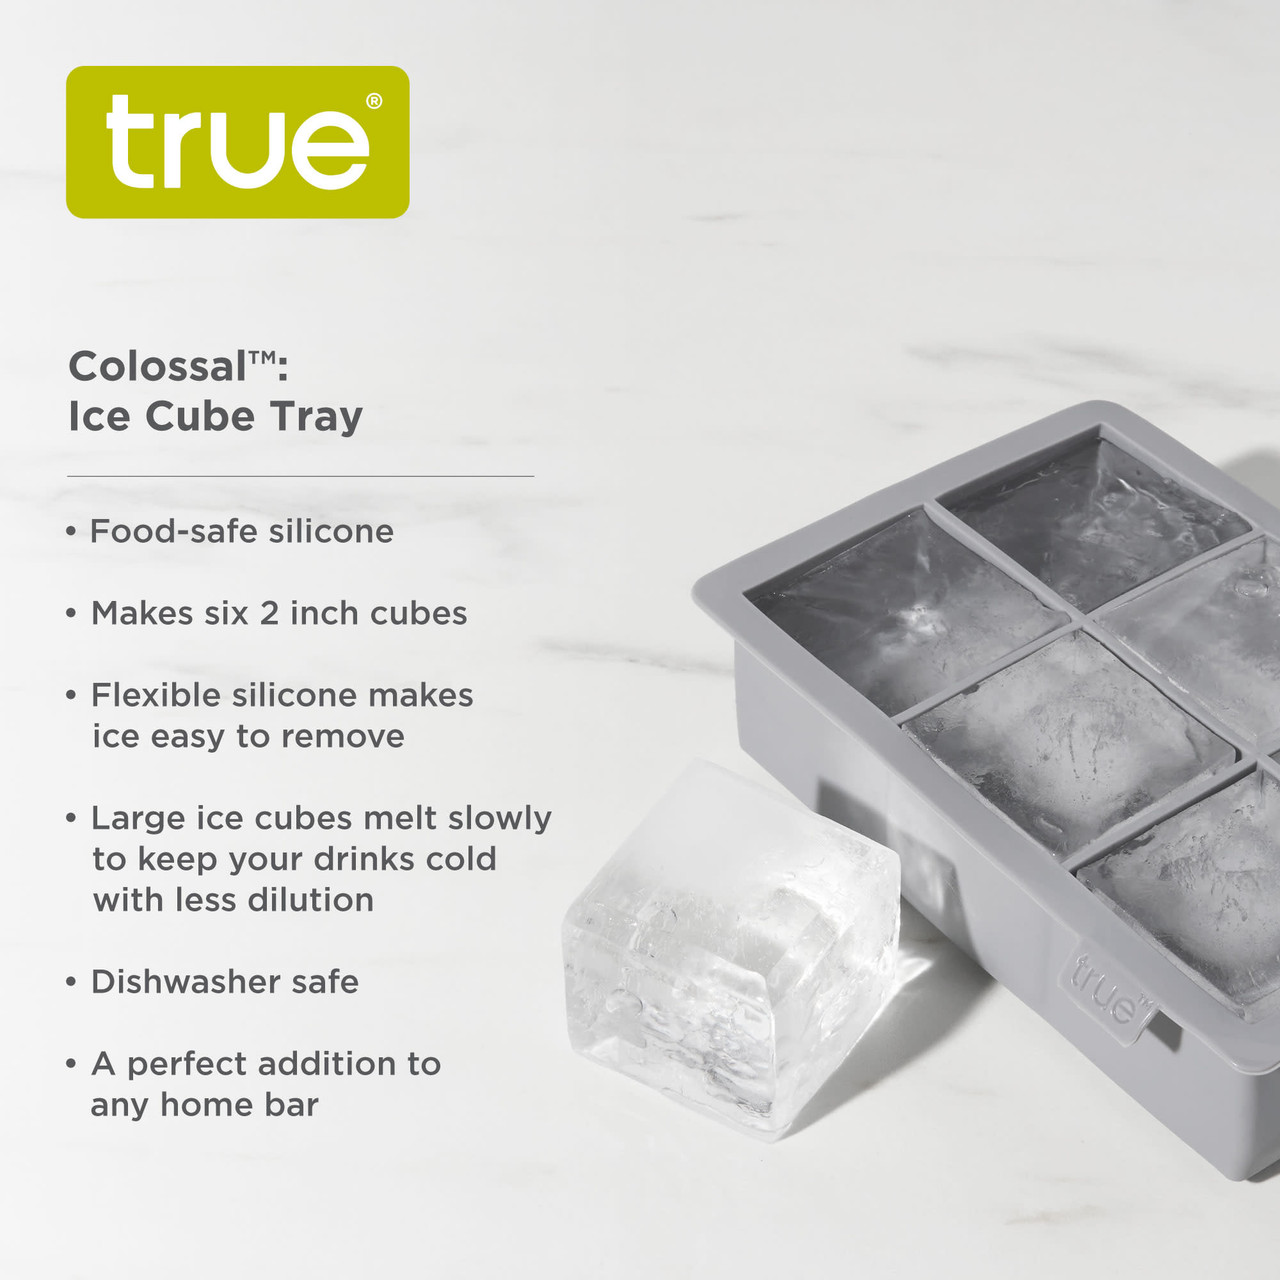 Colossal: Ice Cube Tray